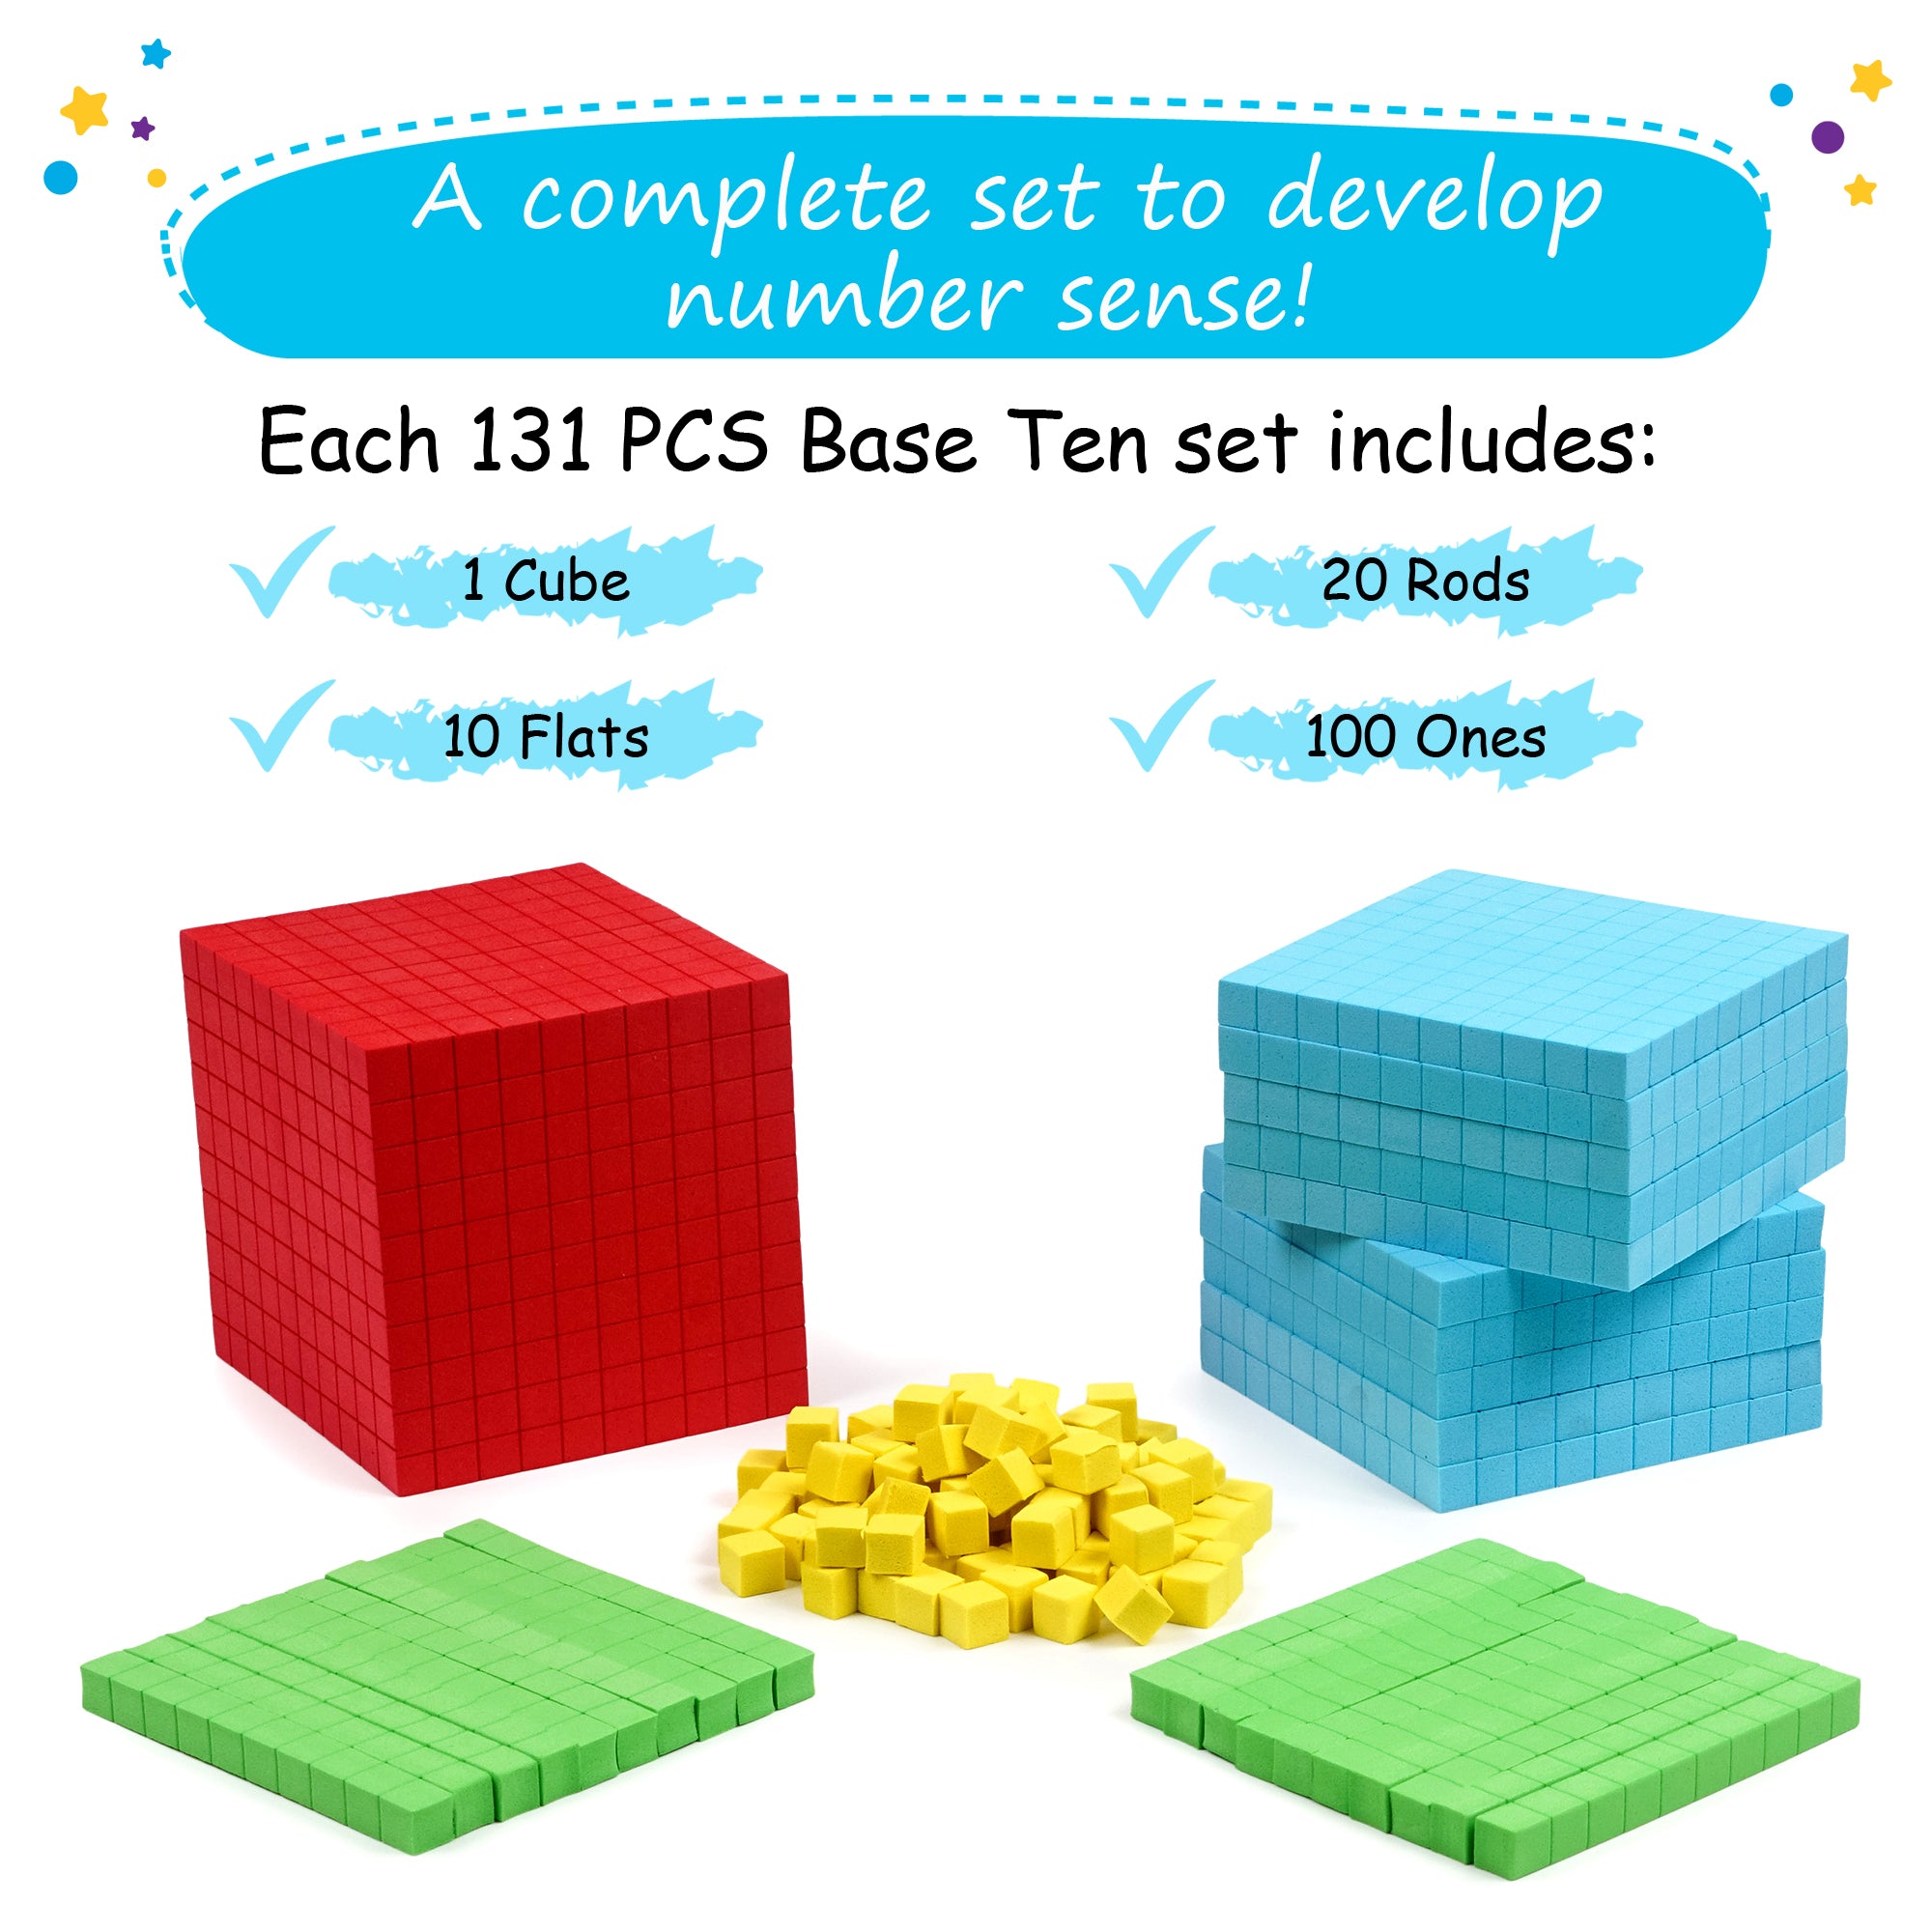 Colorful Foam Base Ten Blocks Starter Set